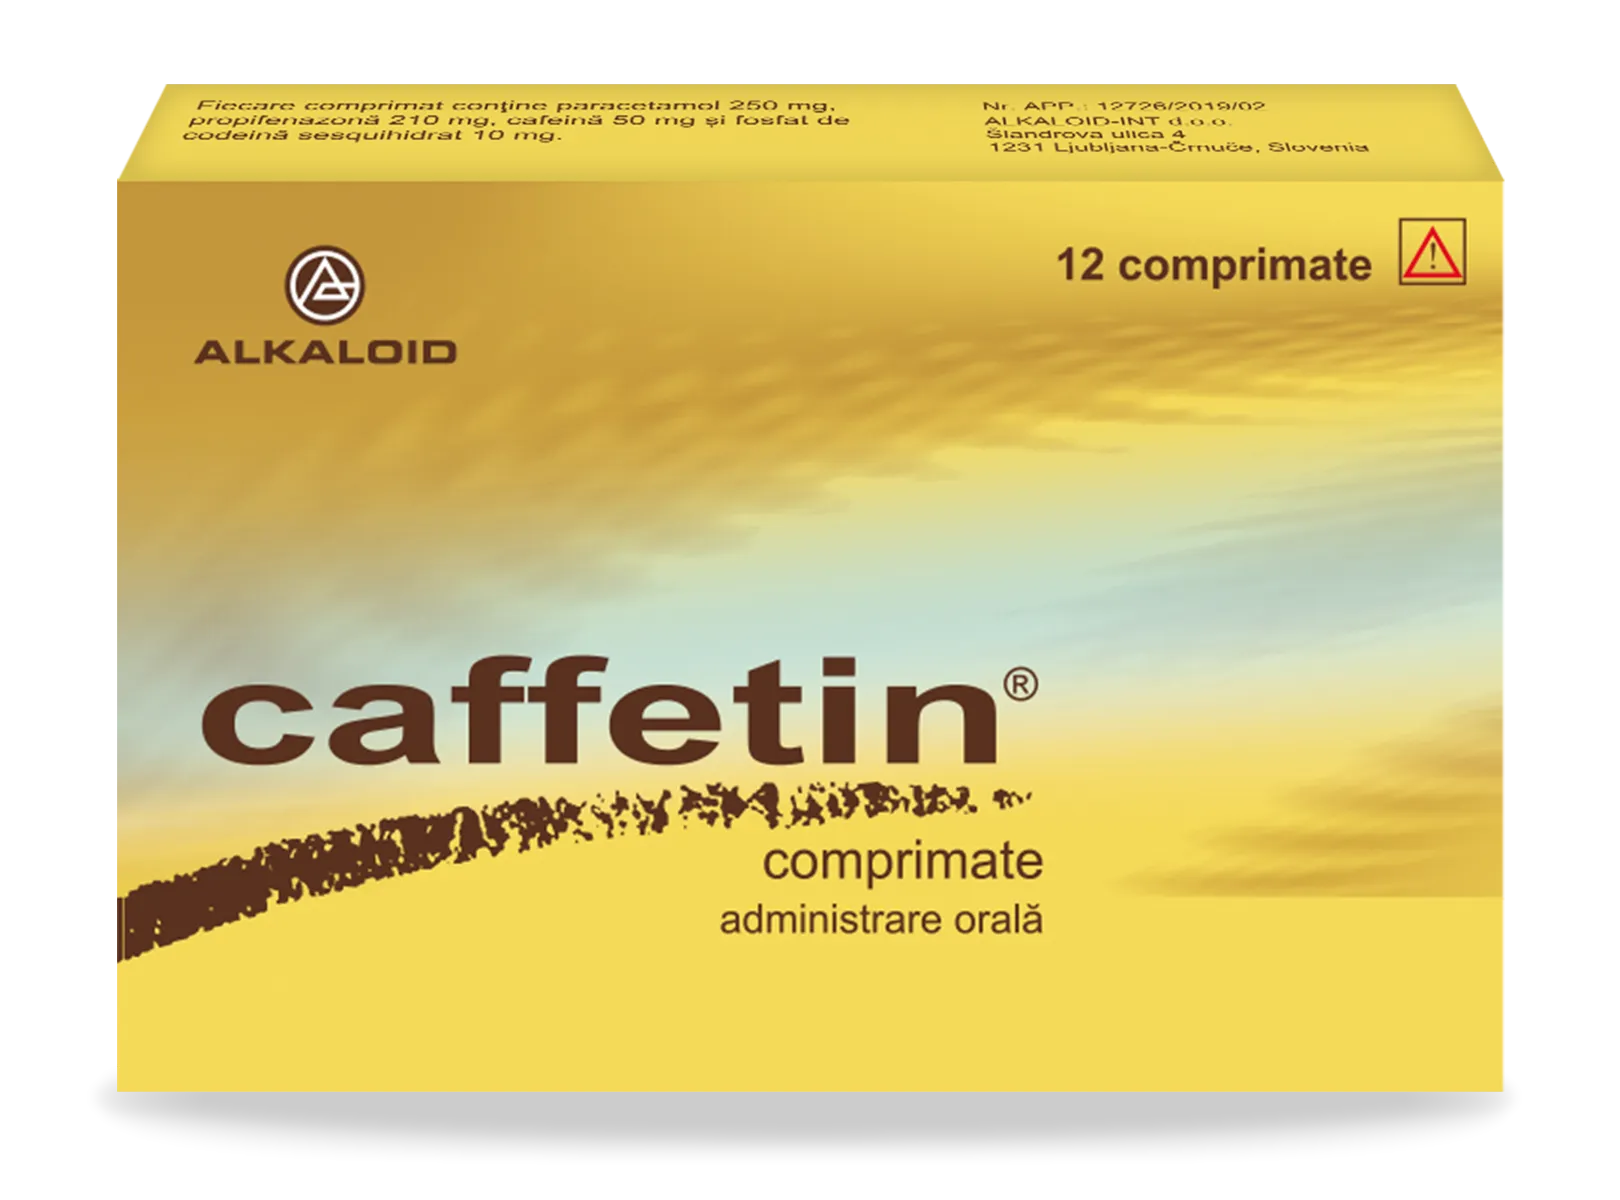 Caffetin, 12 comprimate, Alkaloid 